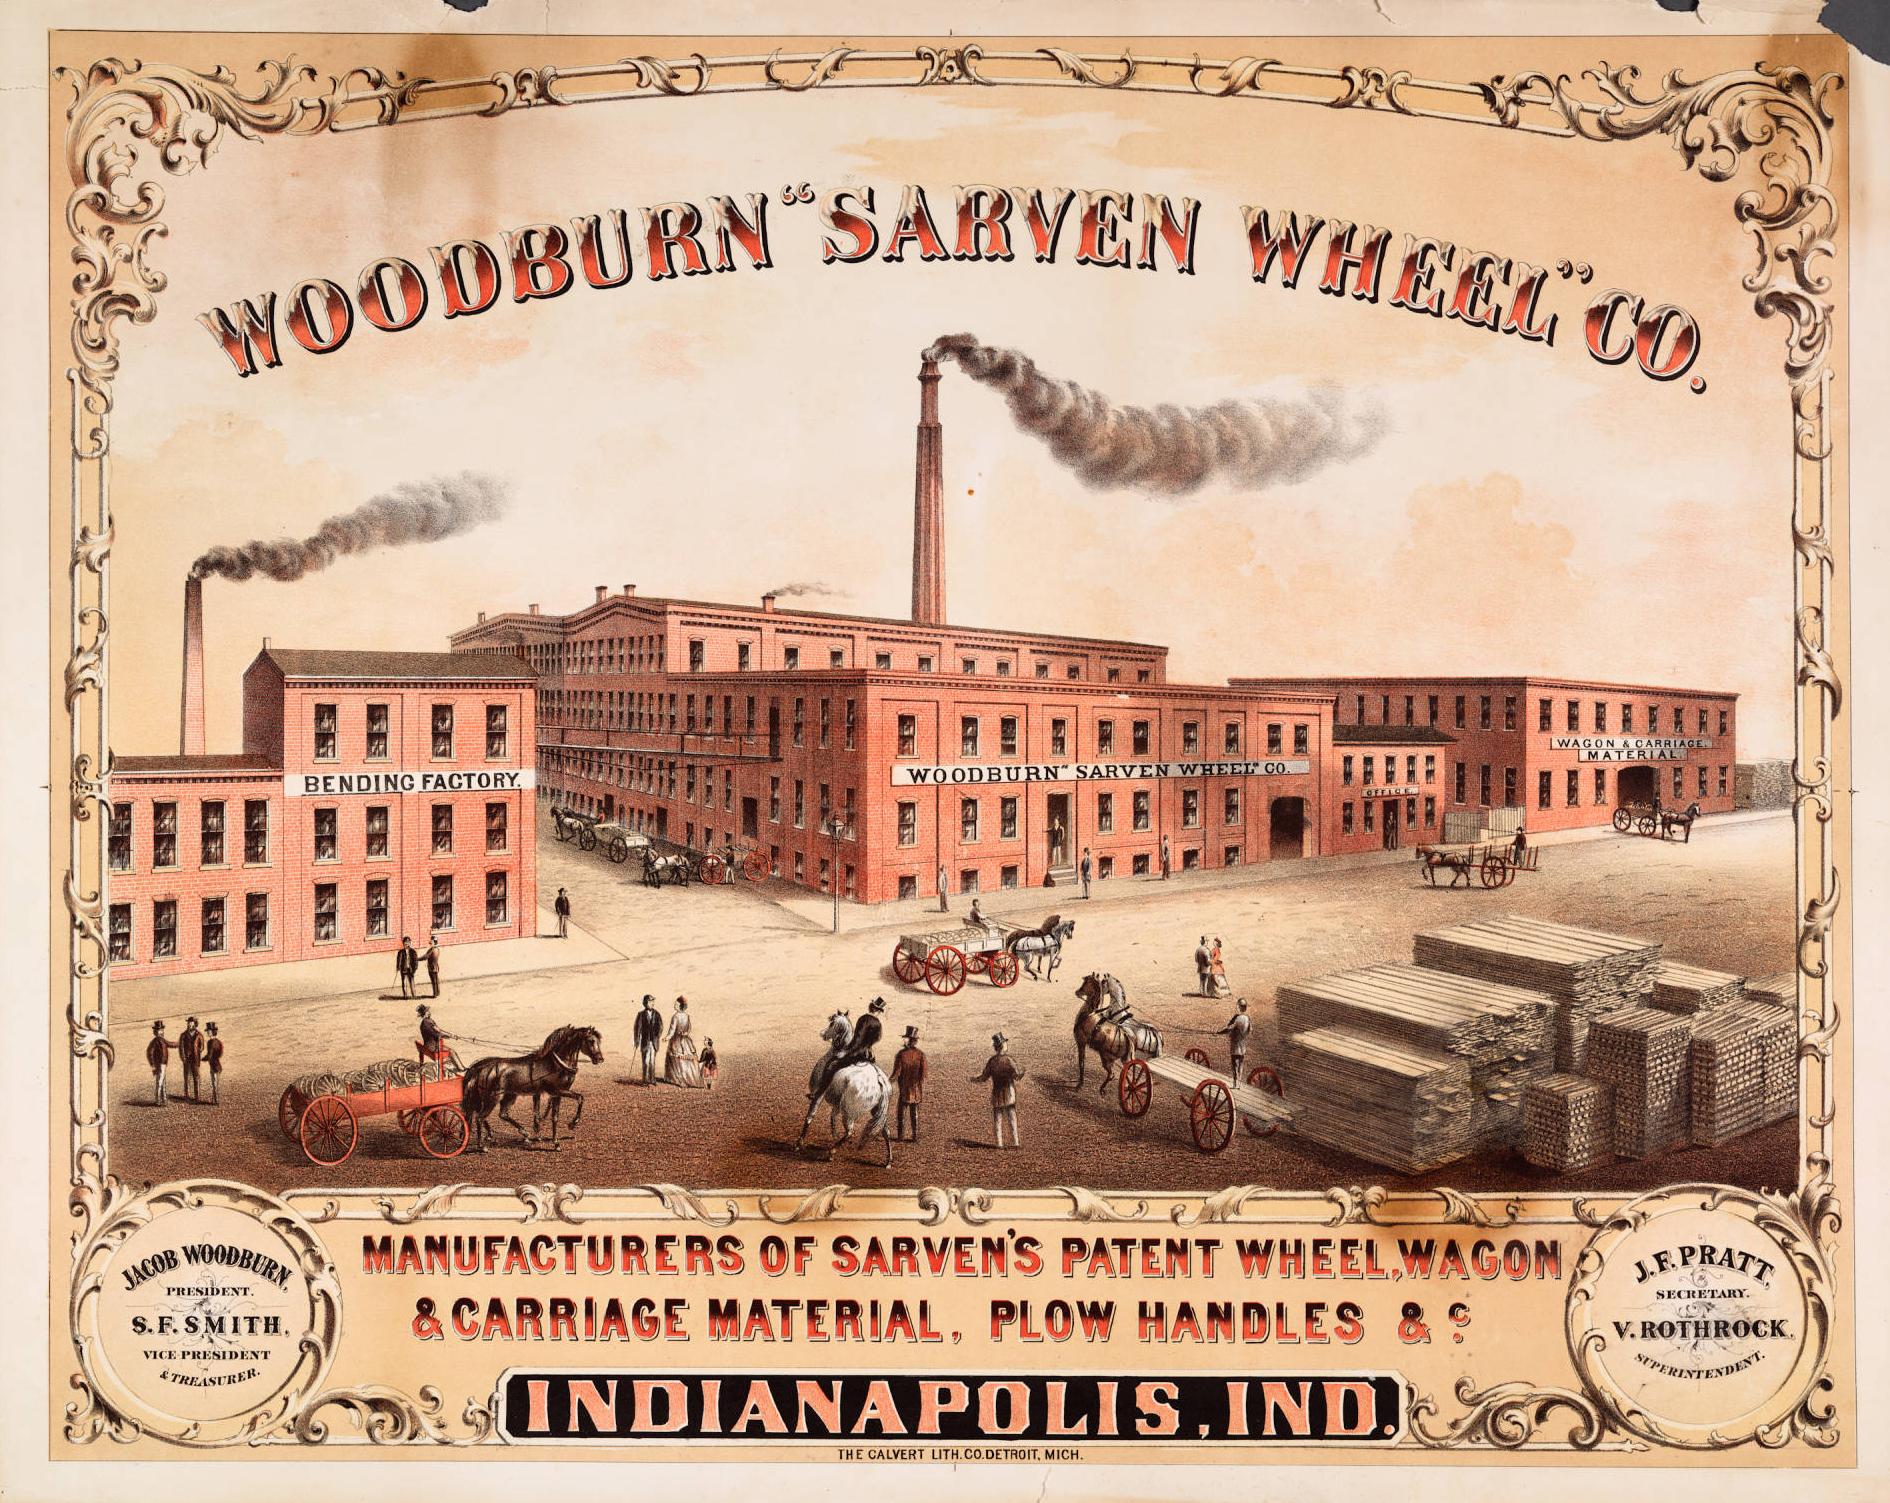 Woodburn Sarven Wheel Company